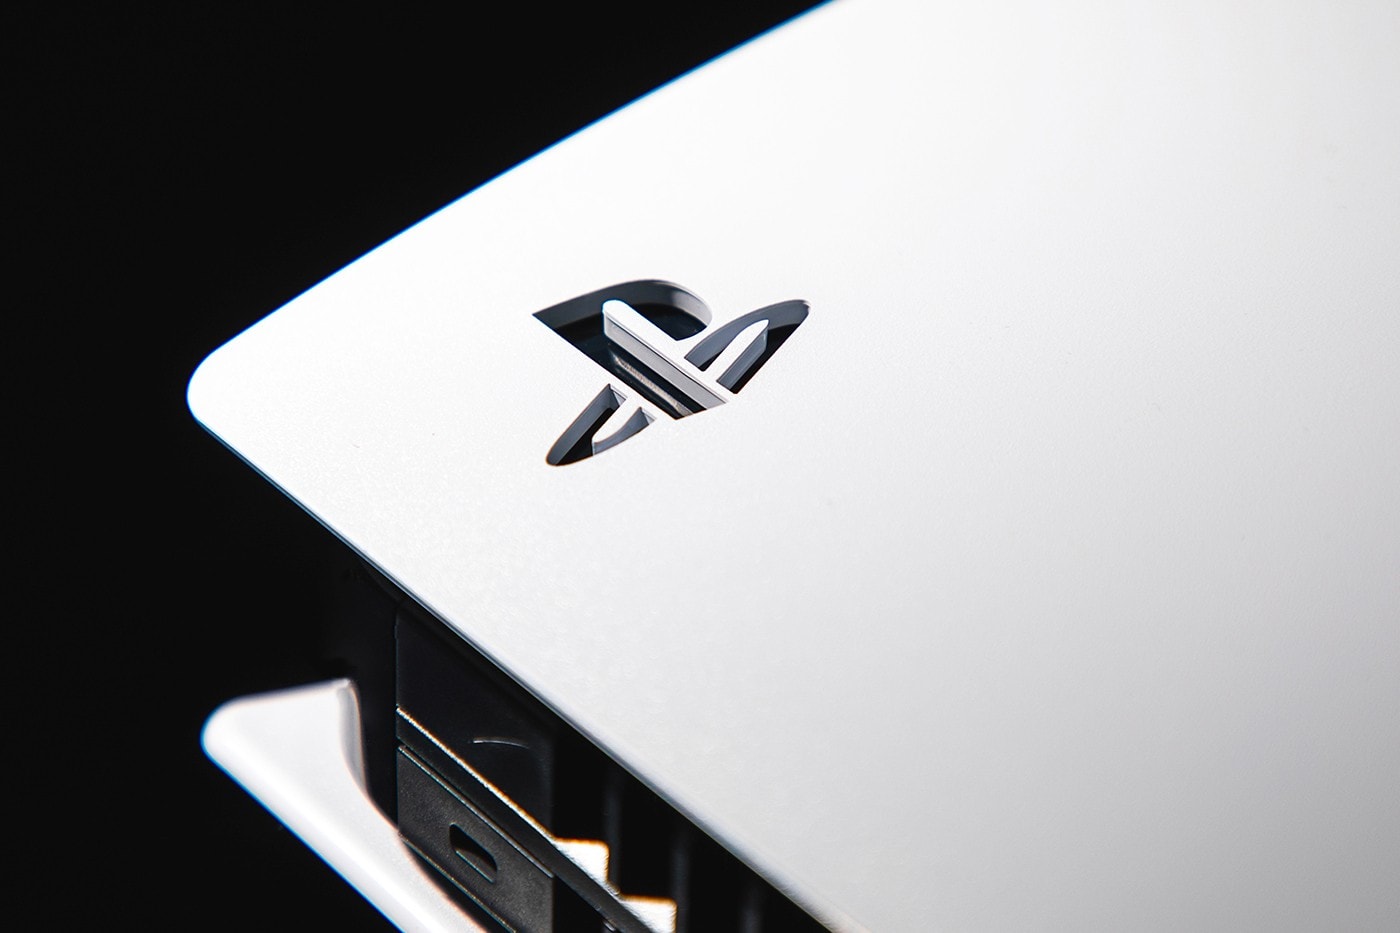 消息稱 Sony 將生產更多 PS4 來應對 PlayStation 5 短缺問題